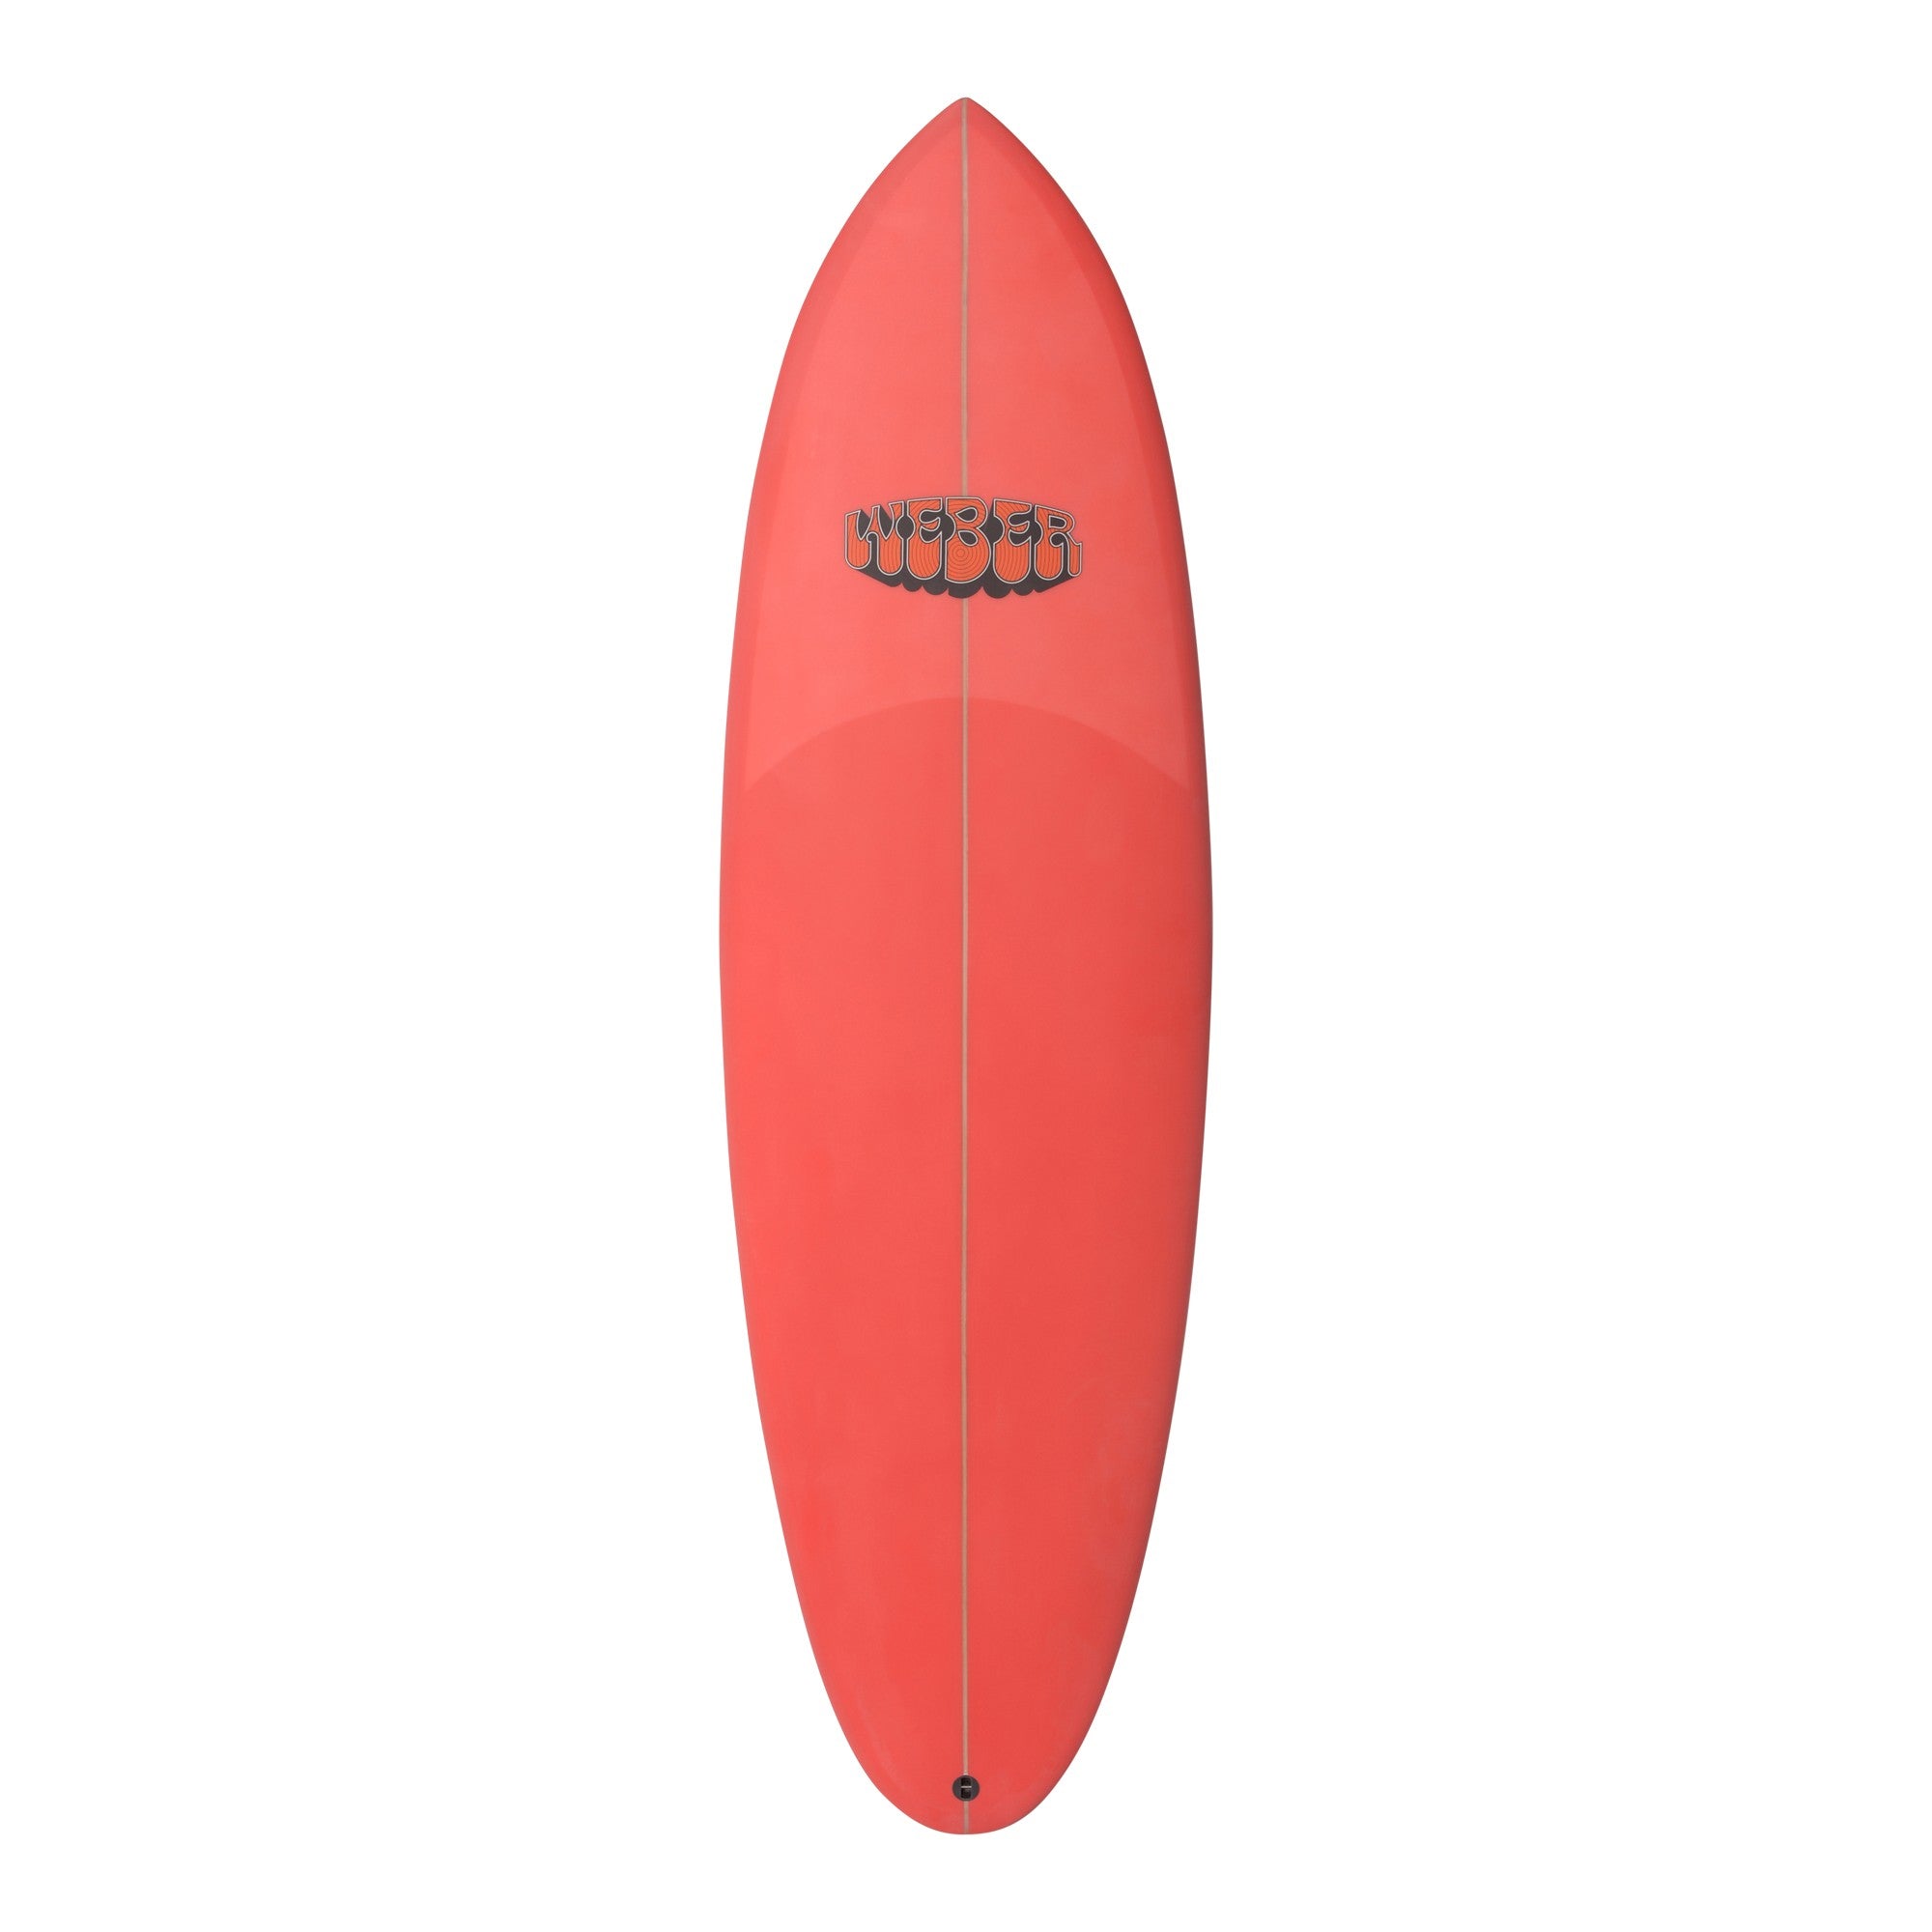 WEBER SURFBOARDS - Easy Rider 6'6 - Red